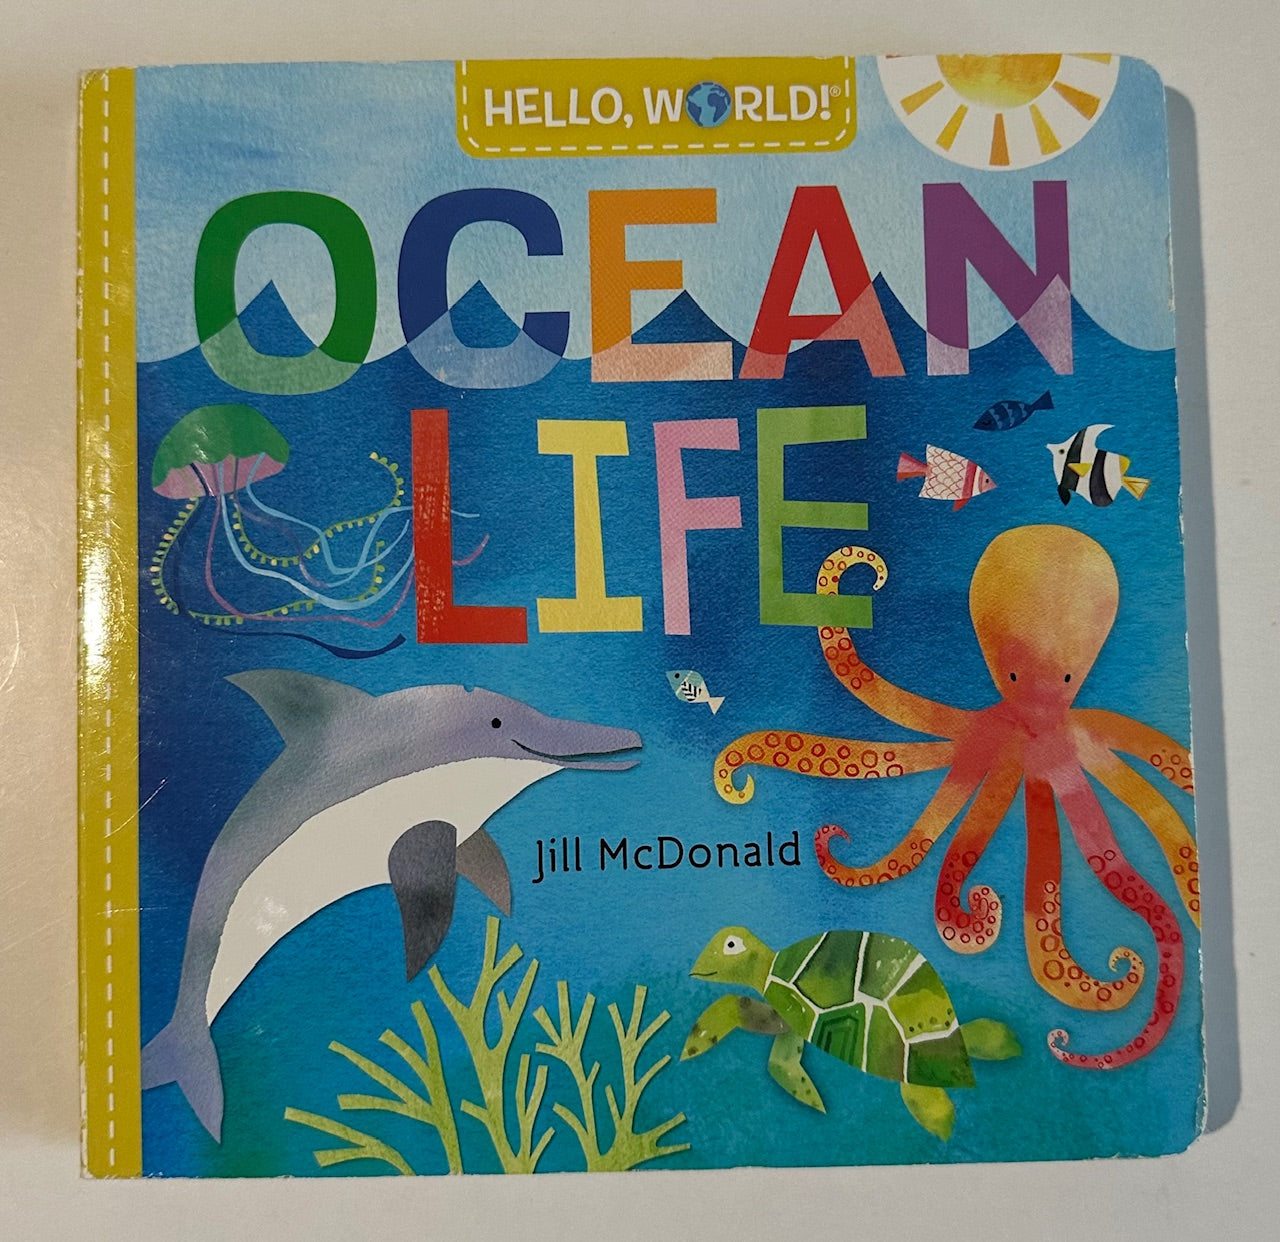 "Hello, World! Ocean Life"